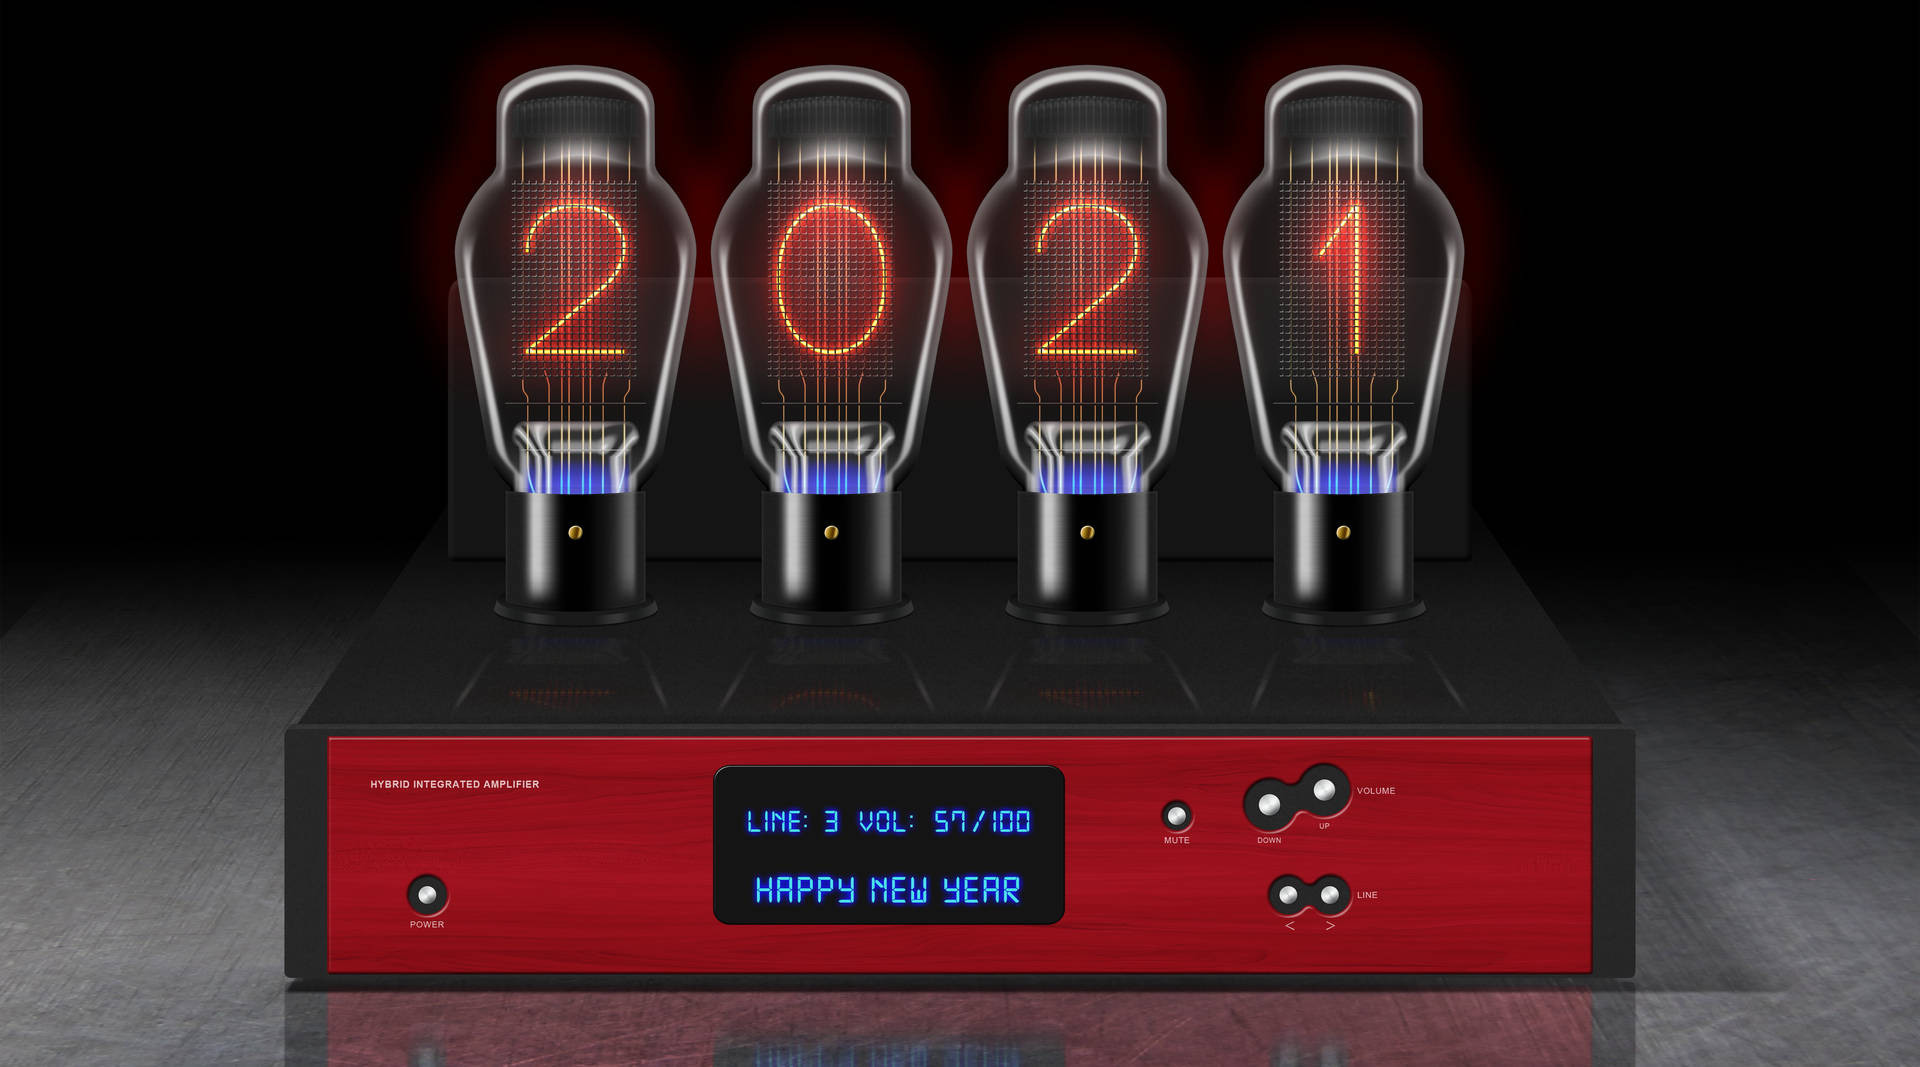 Amplifier 2021 Desktop Background